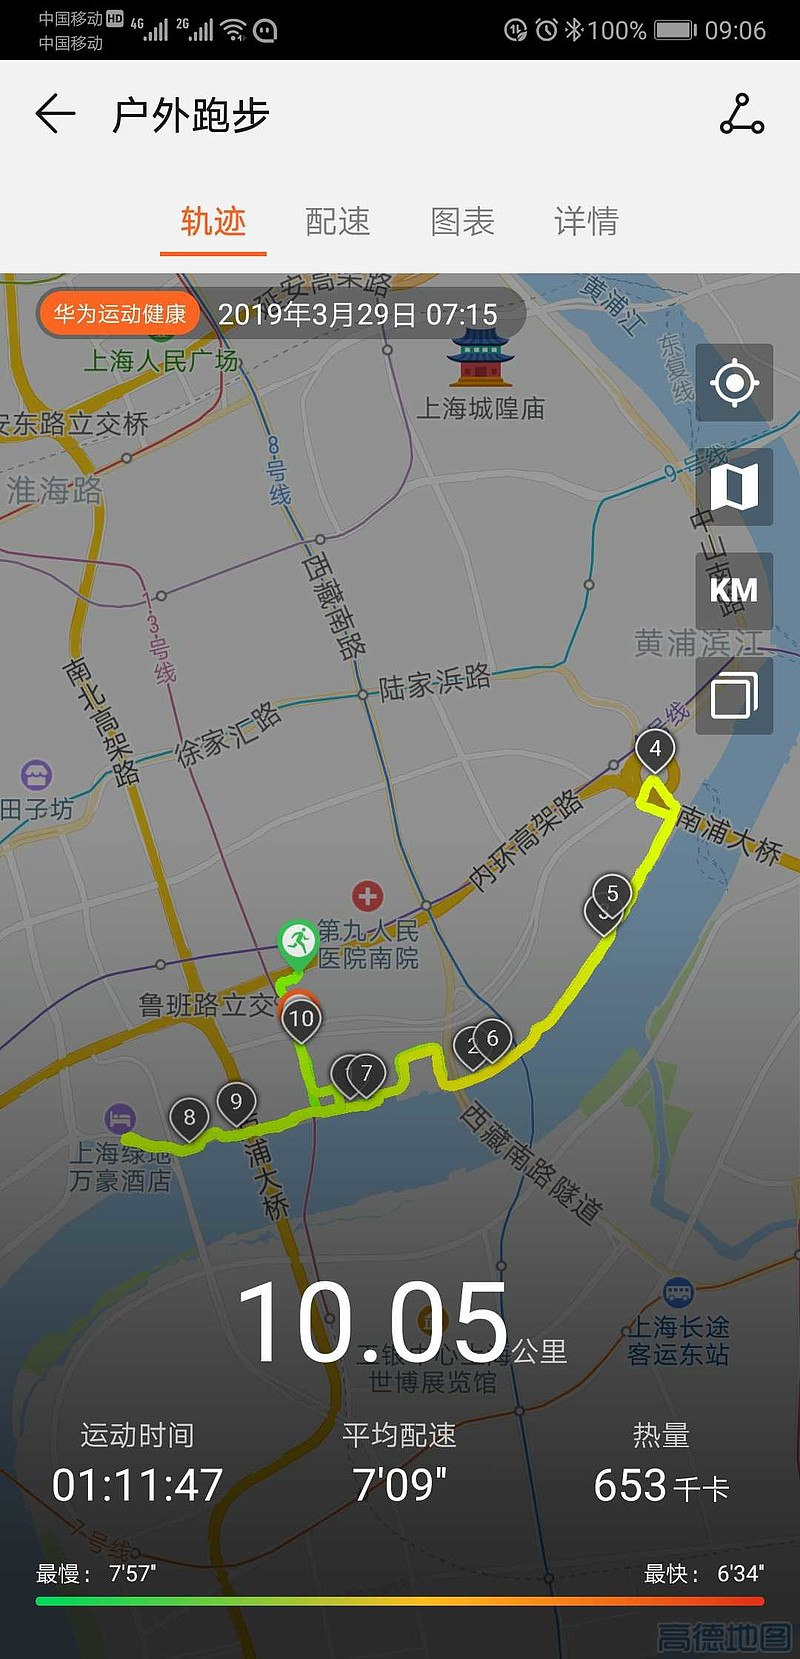 【10km晨练】健康跑，轻松跑